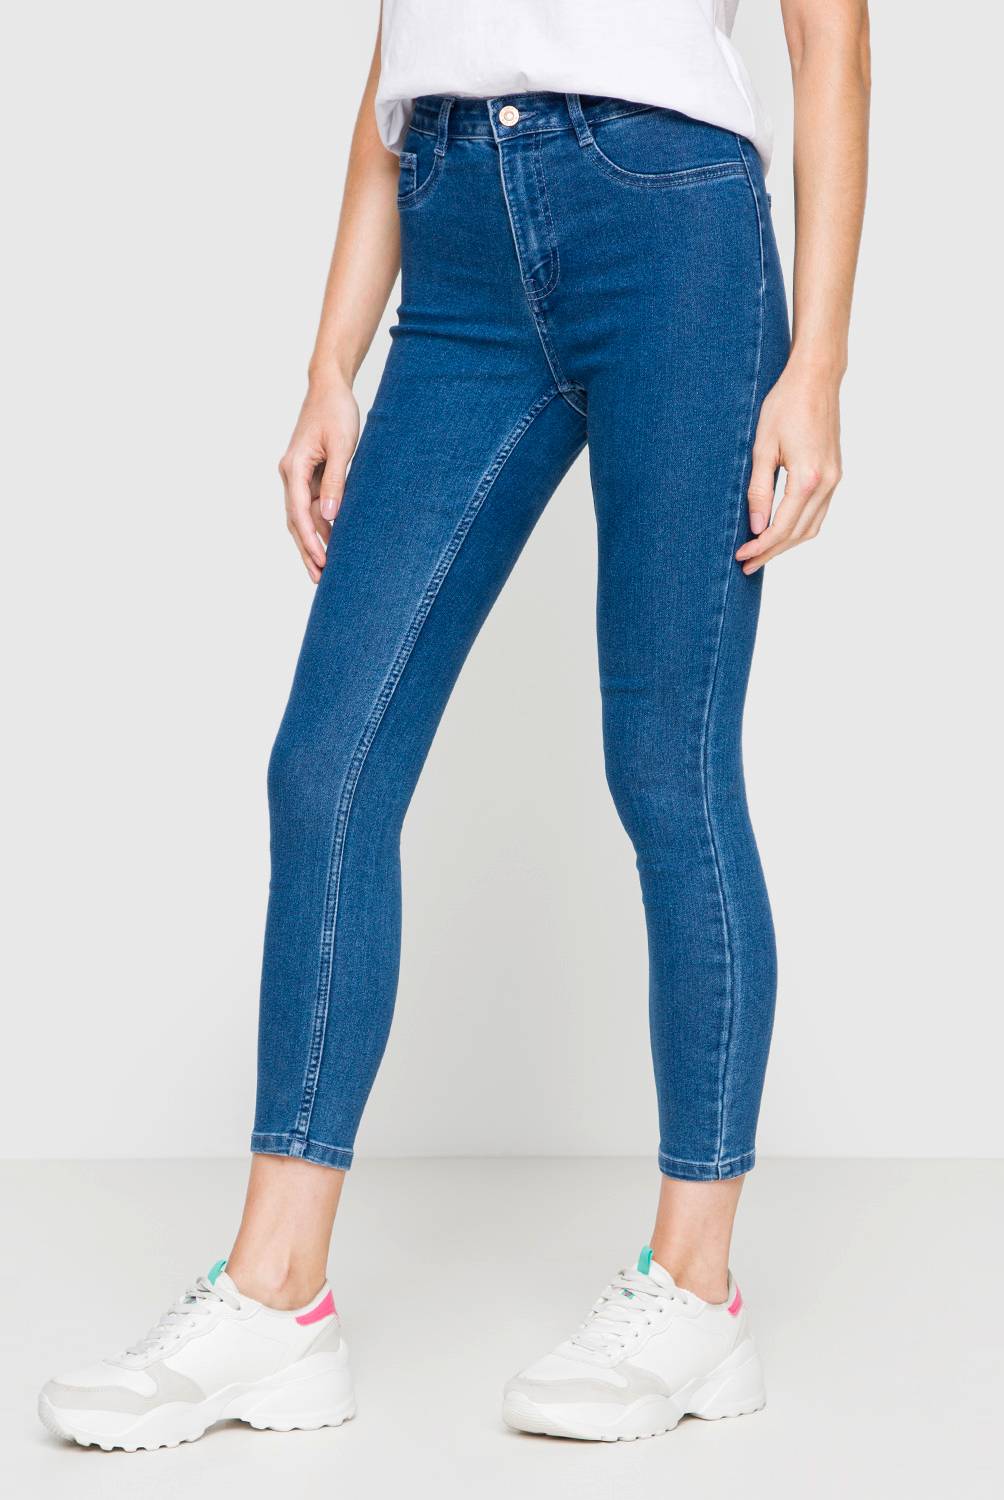 ONLY - Jeans de Algodón Skinny Fit Mujer